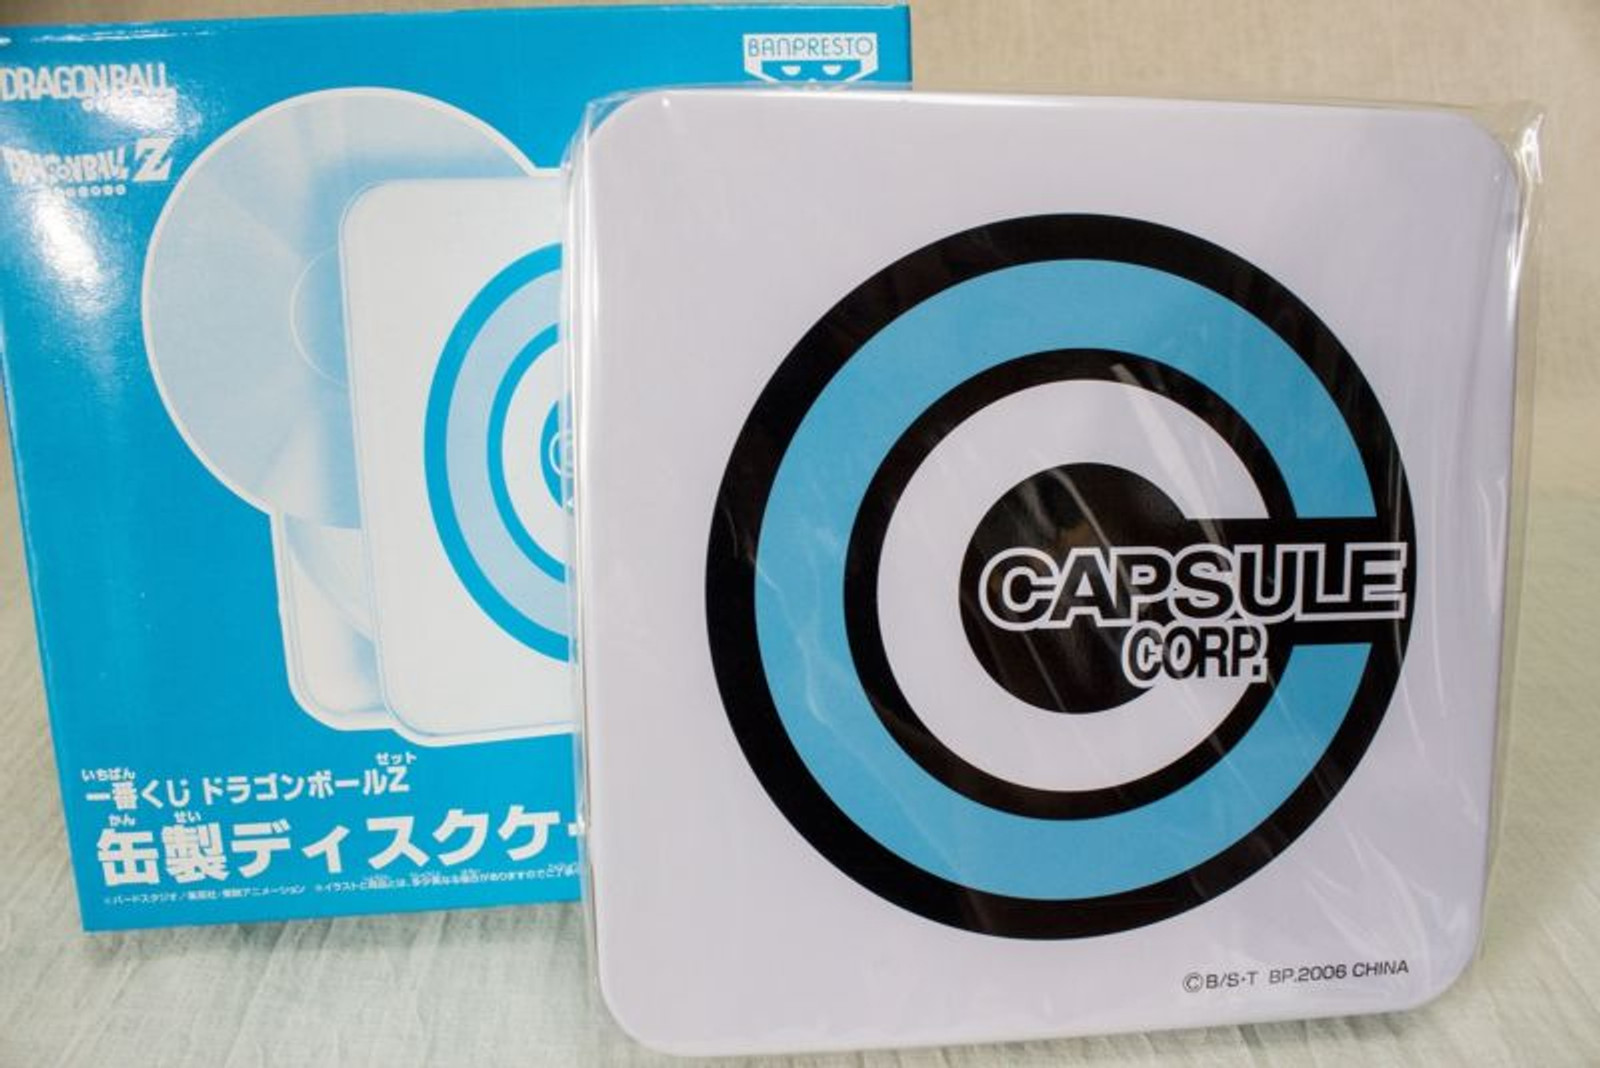 Dragon Ball Z Can type Disc Case Capsule Corp Ichiban Kuji Banpresto JAPAN ANIME